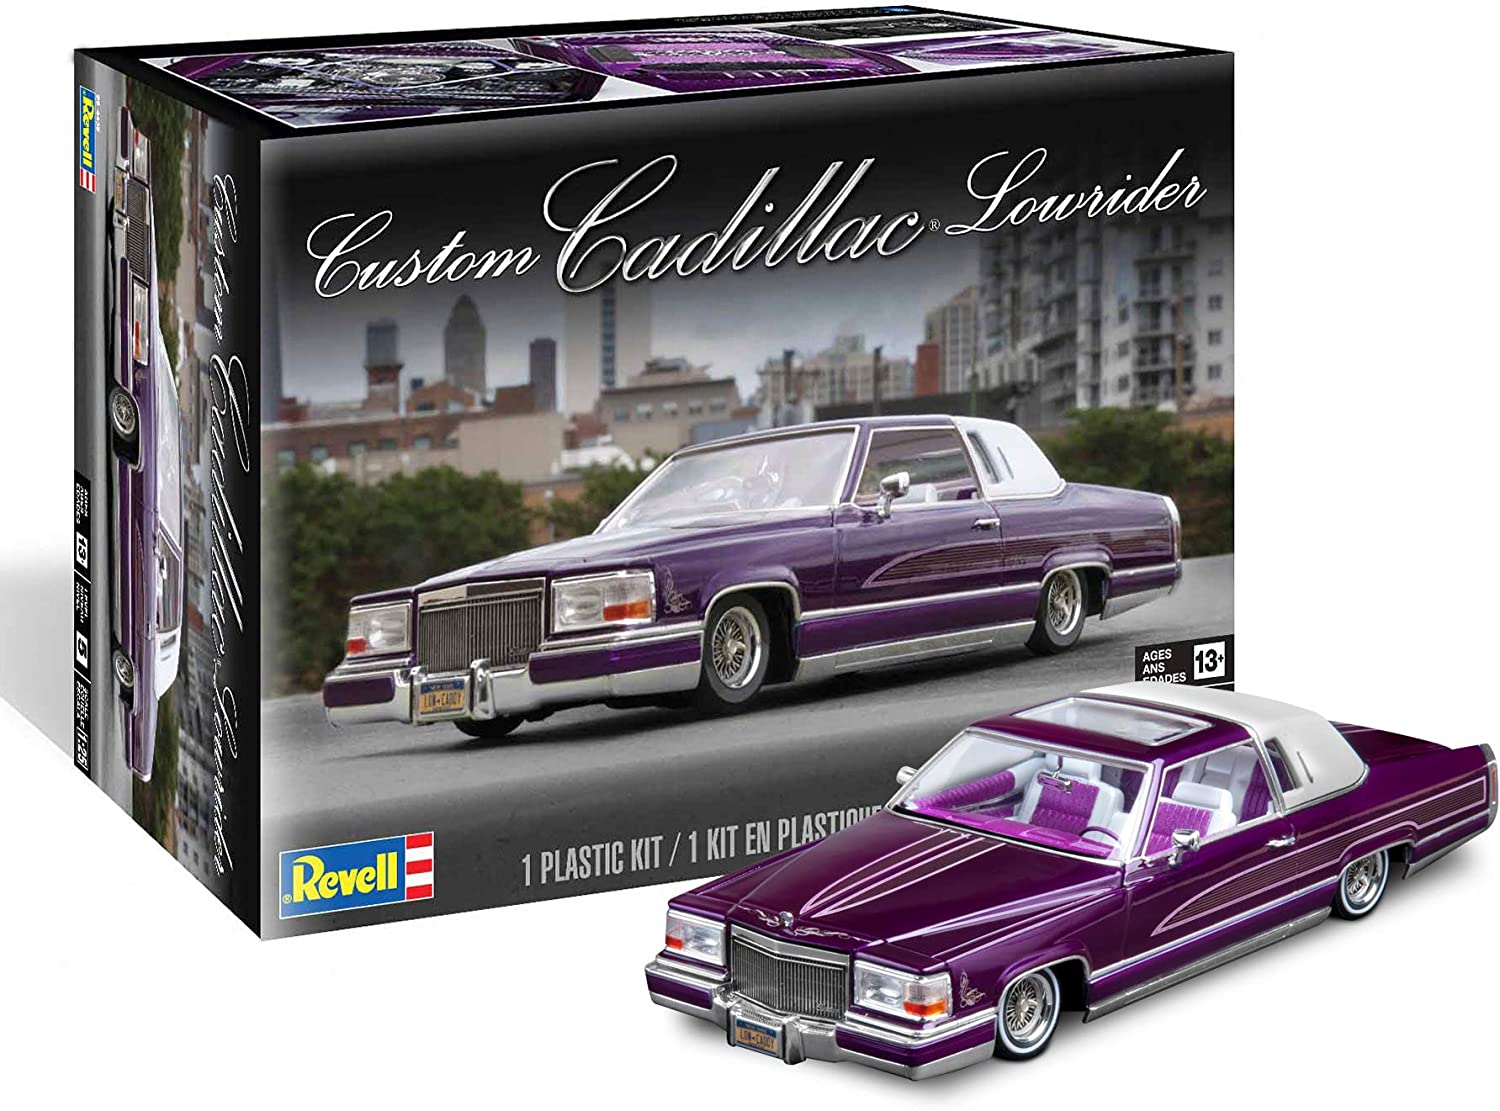 REVELL 85-4438 1/25 Custom Cadillac Lowrider Model Car Kit 110-Piece Skill Level 5 Purple